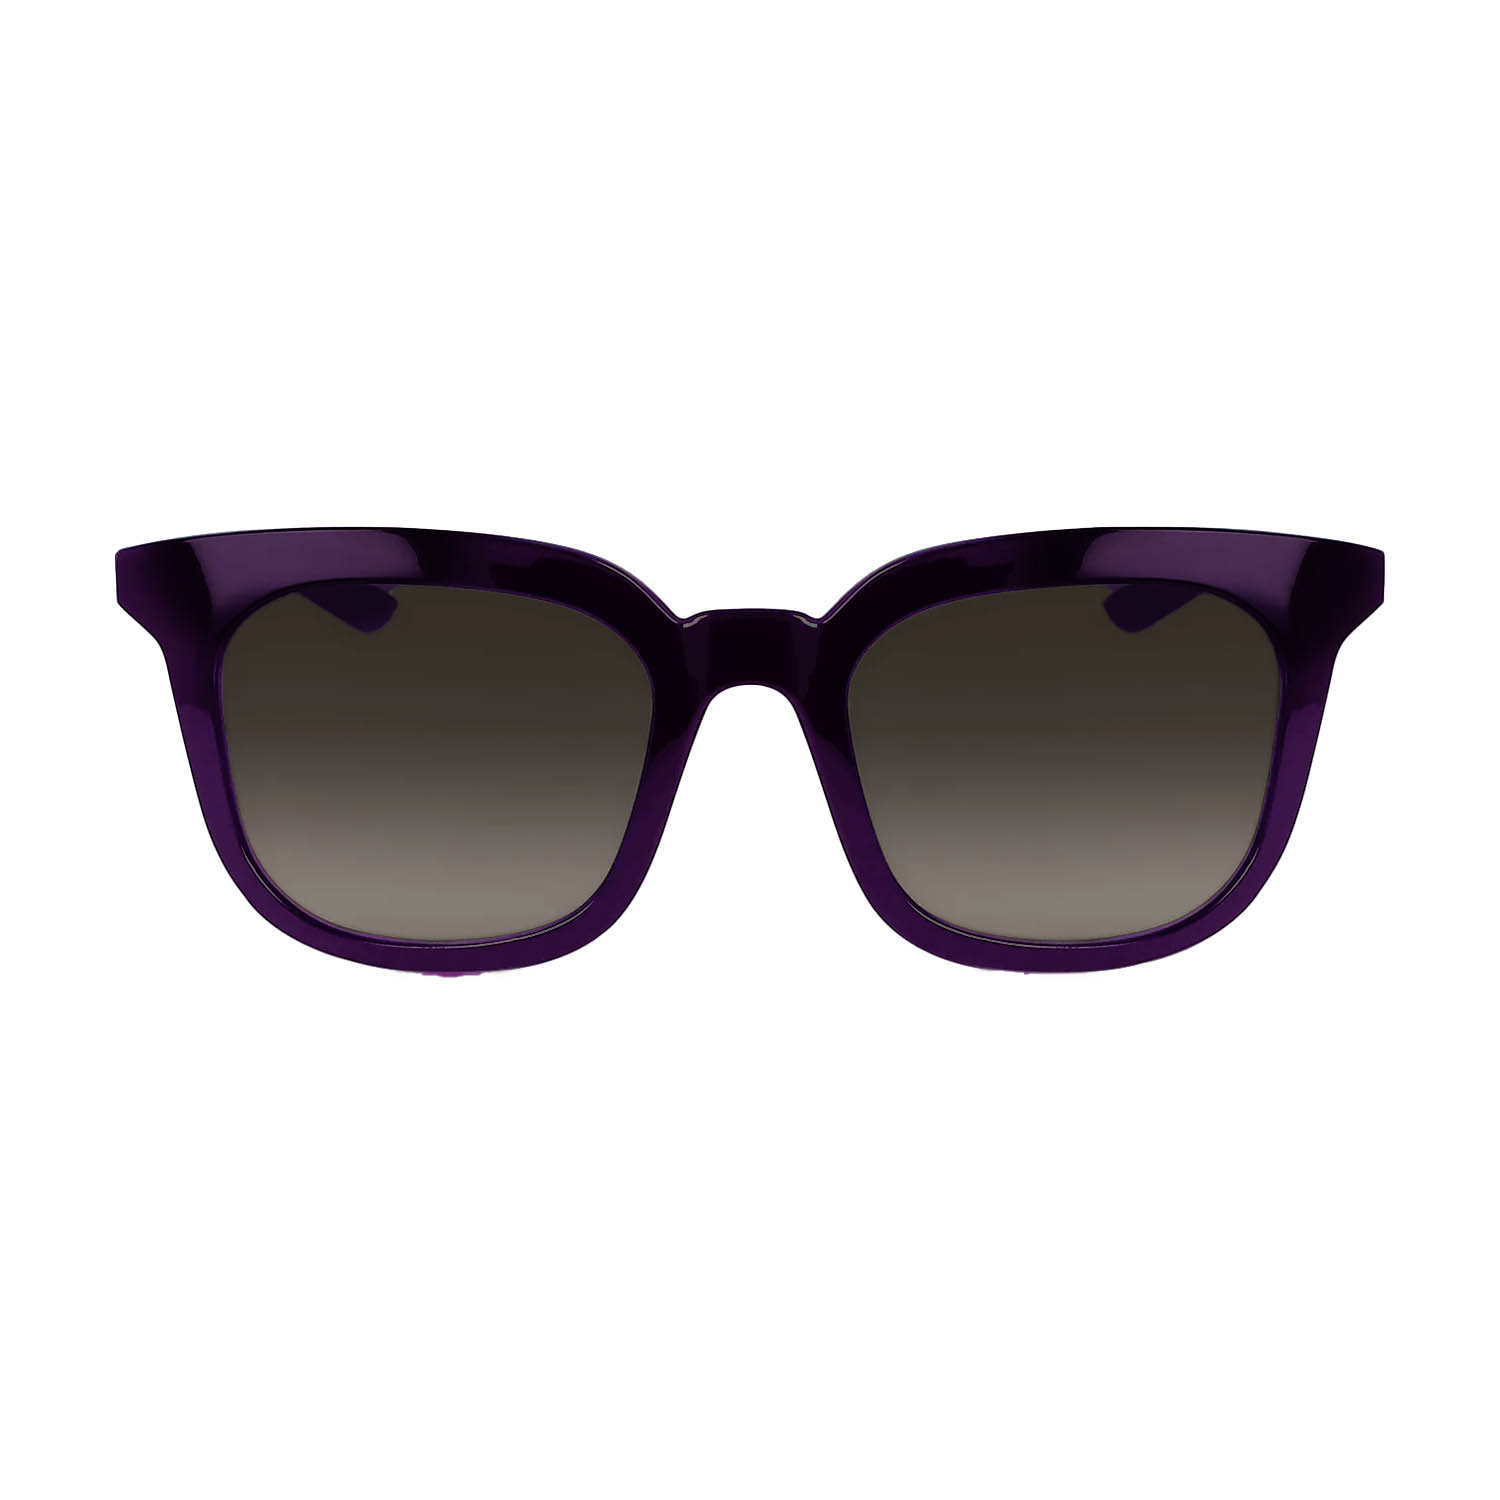 Nike Myriad Sunglasses - Violet/Marron Gradient